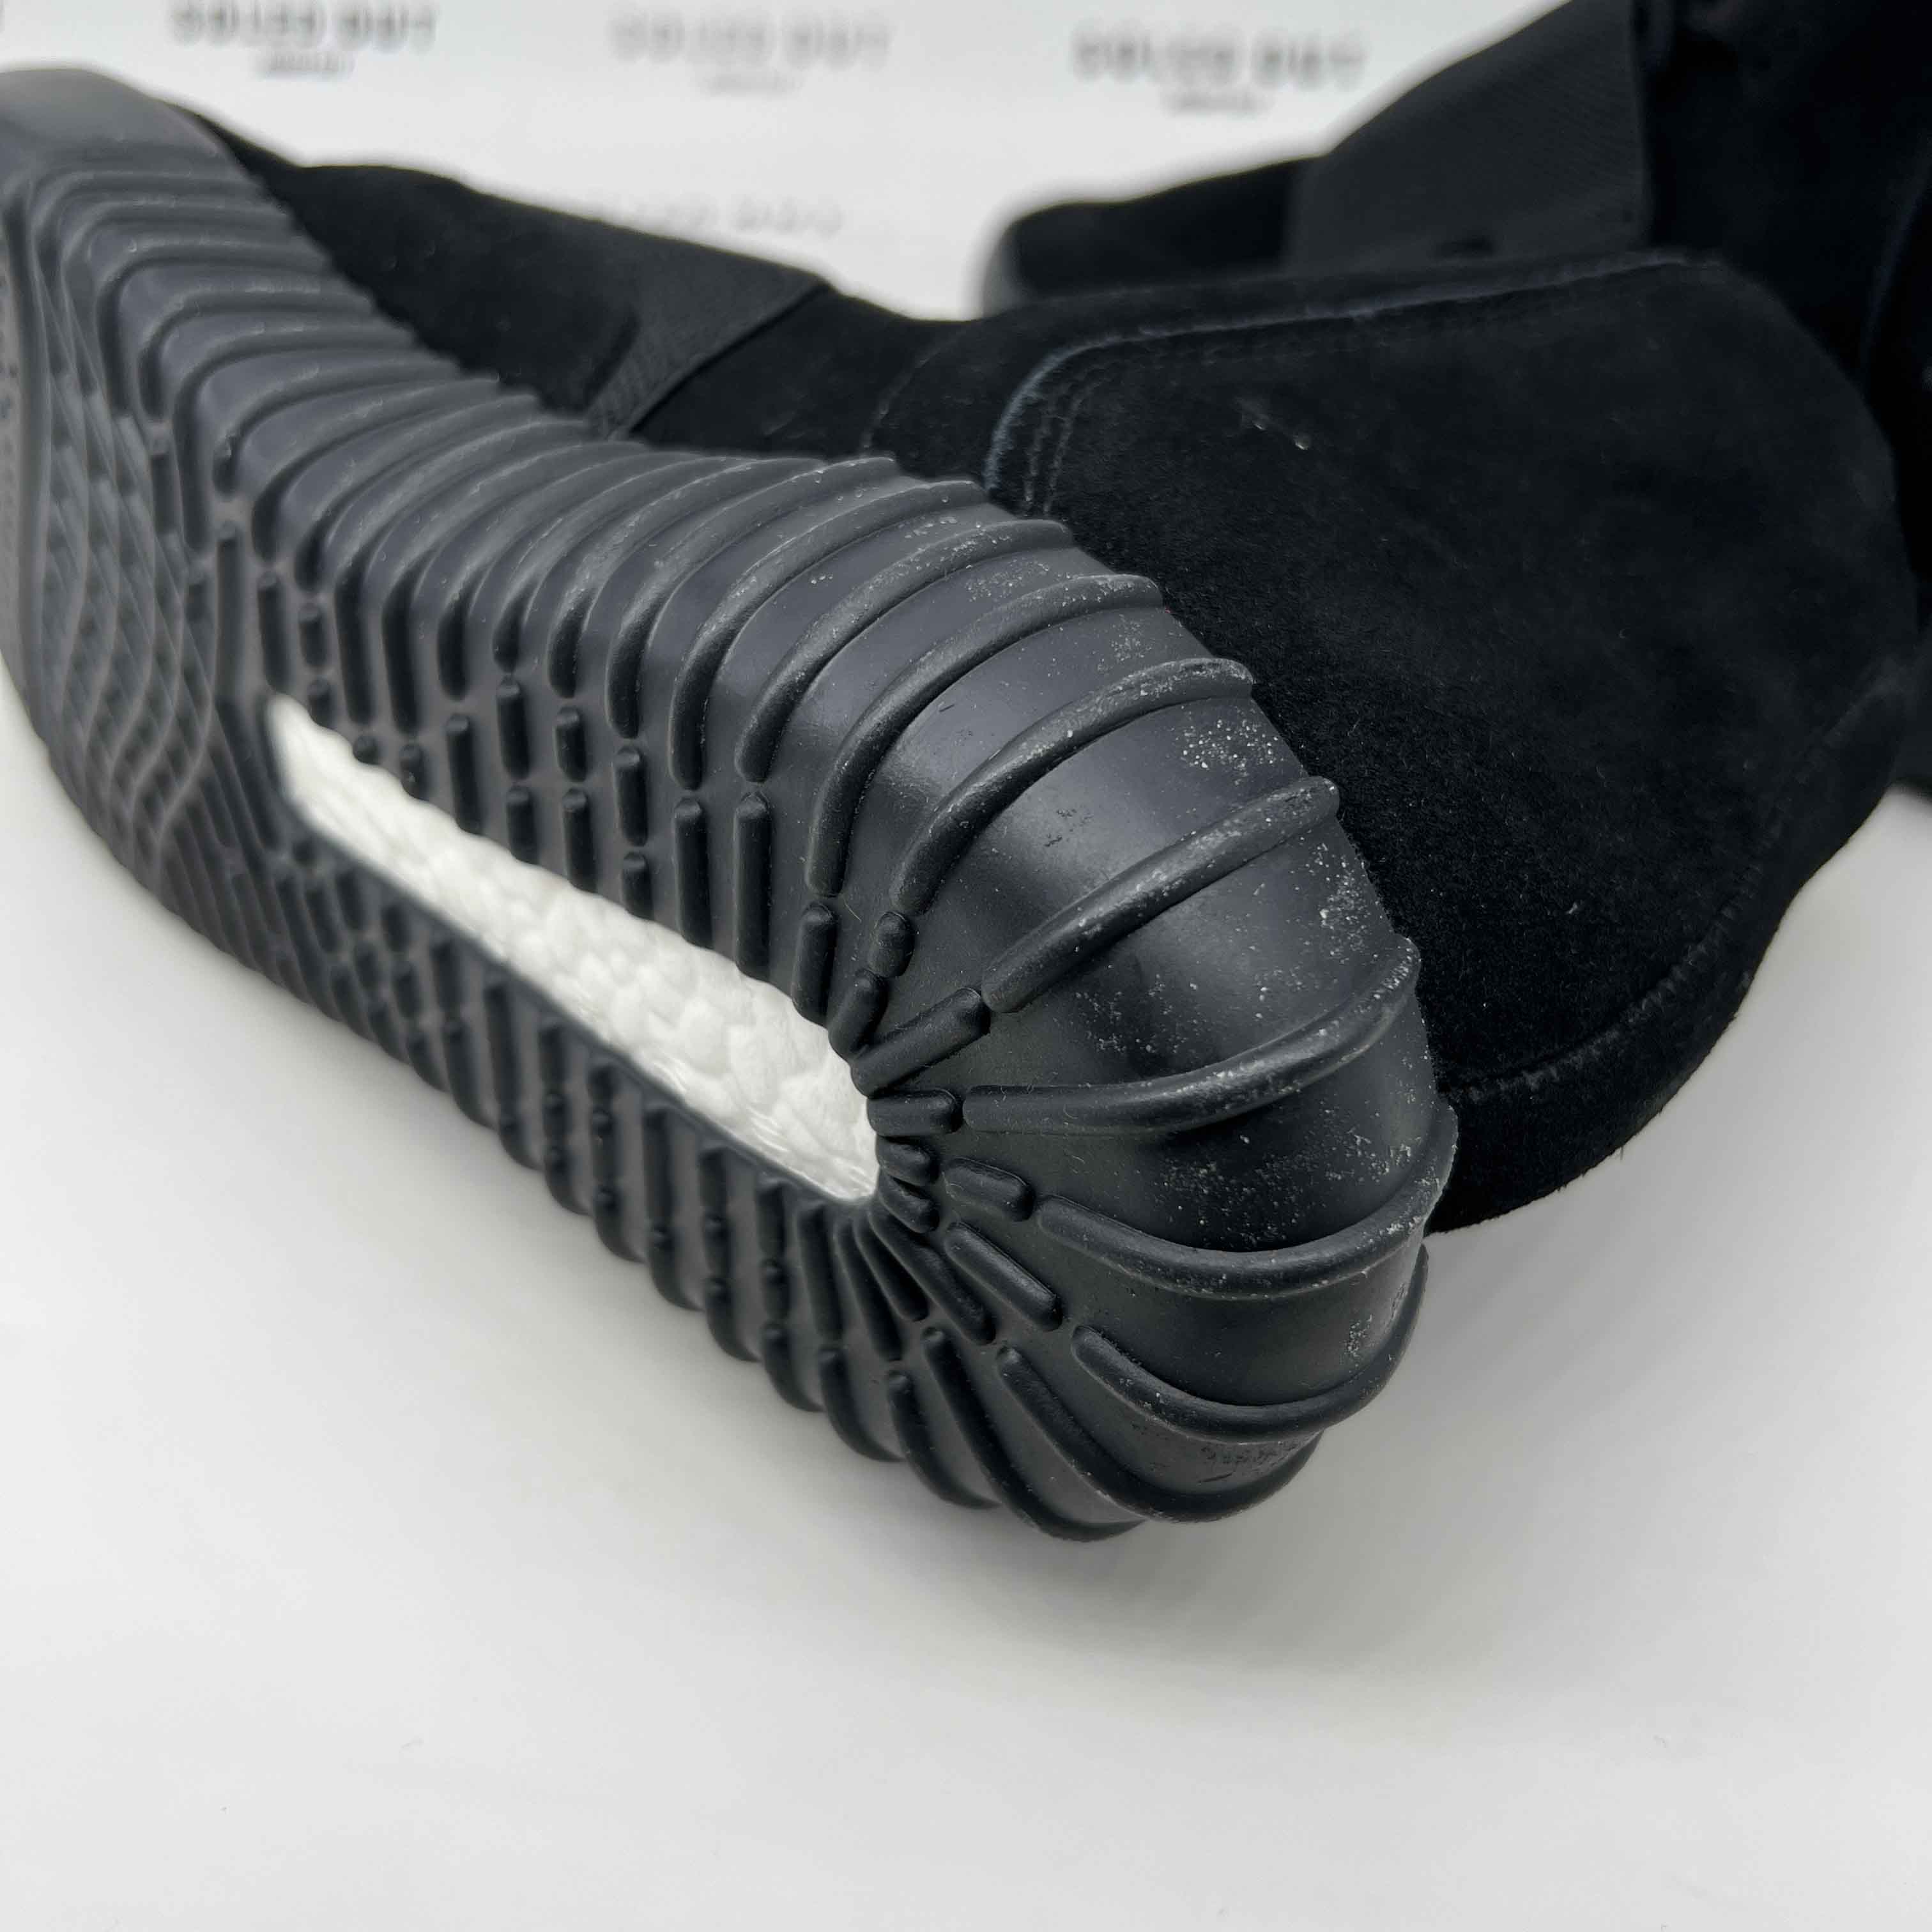 Yeezy 750 "Triple Black" 2015 New (Cond) Size 7